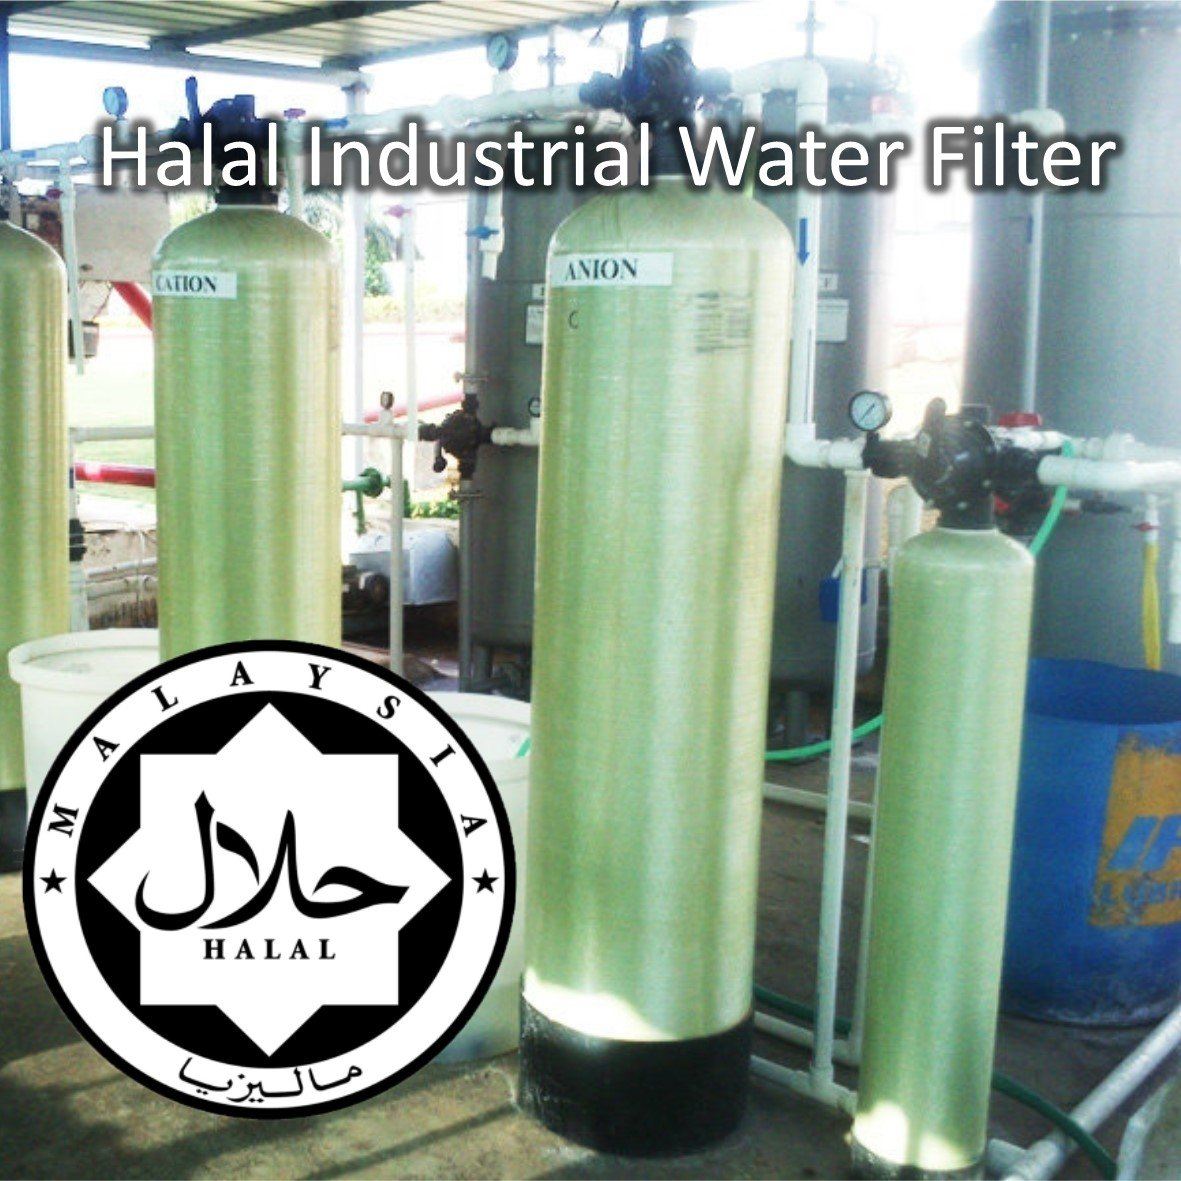 Halal Industrial Water Filter